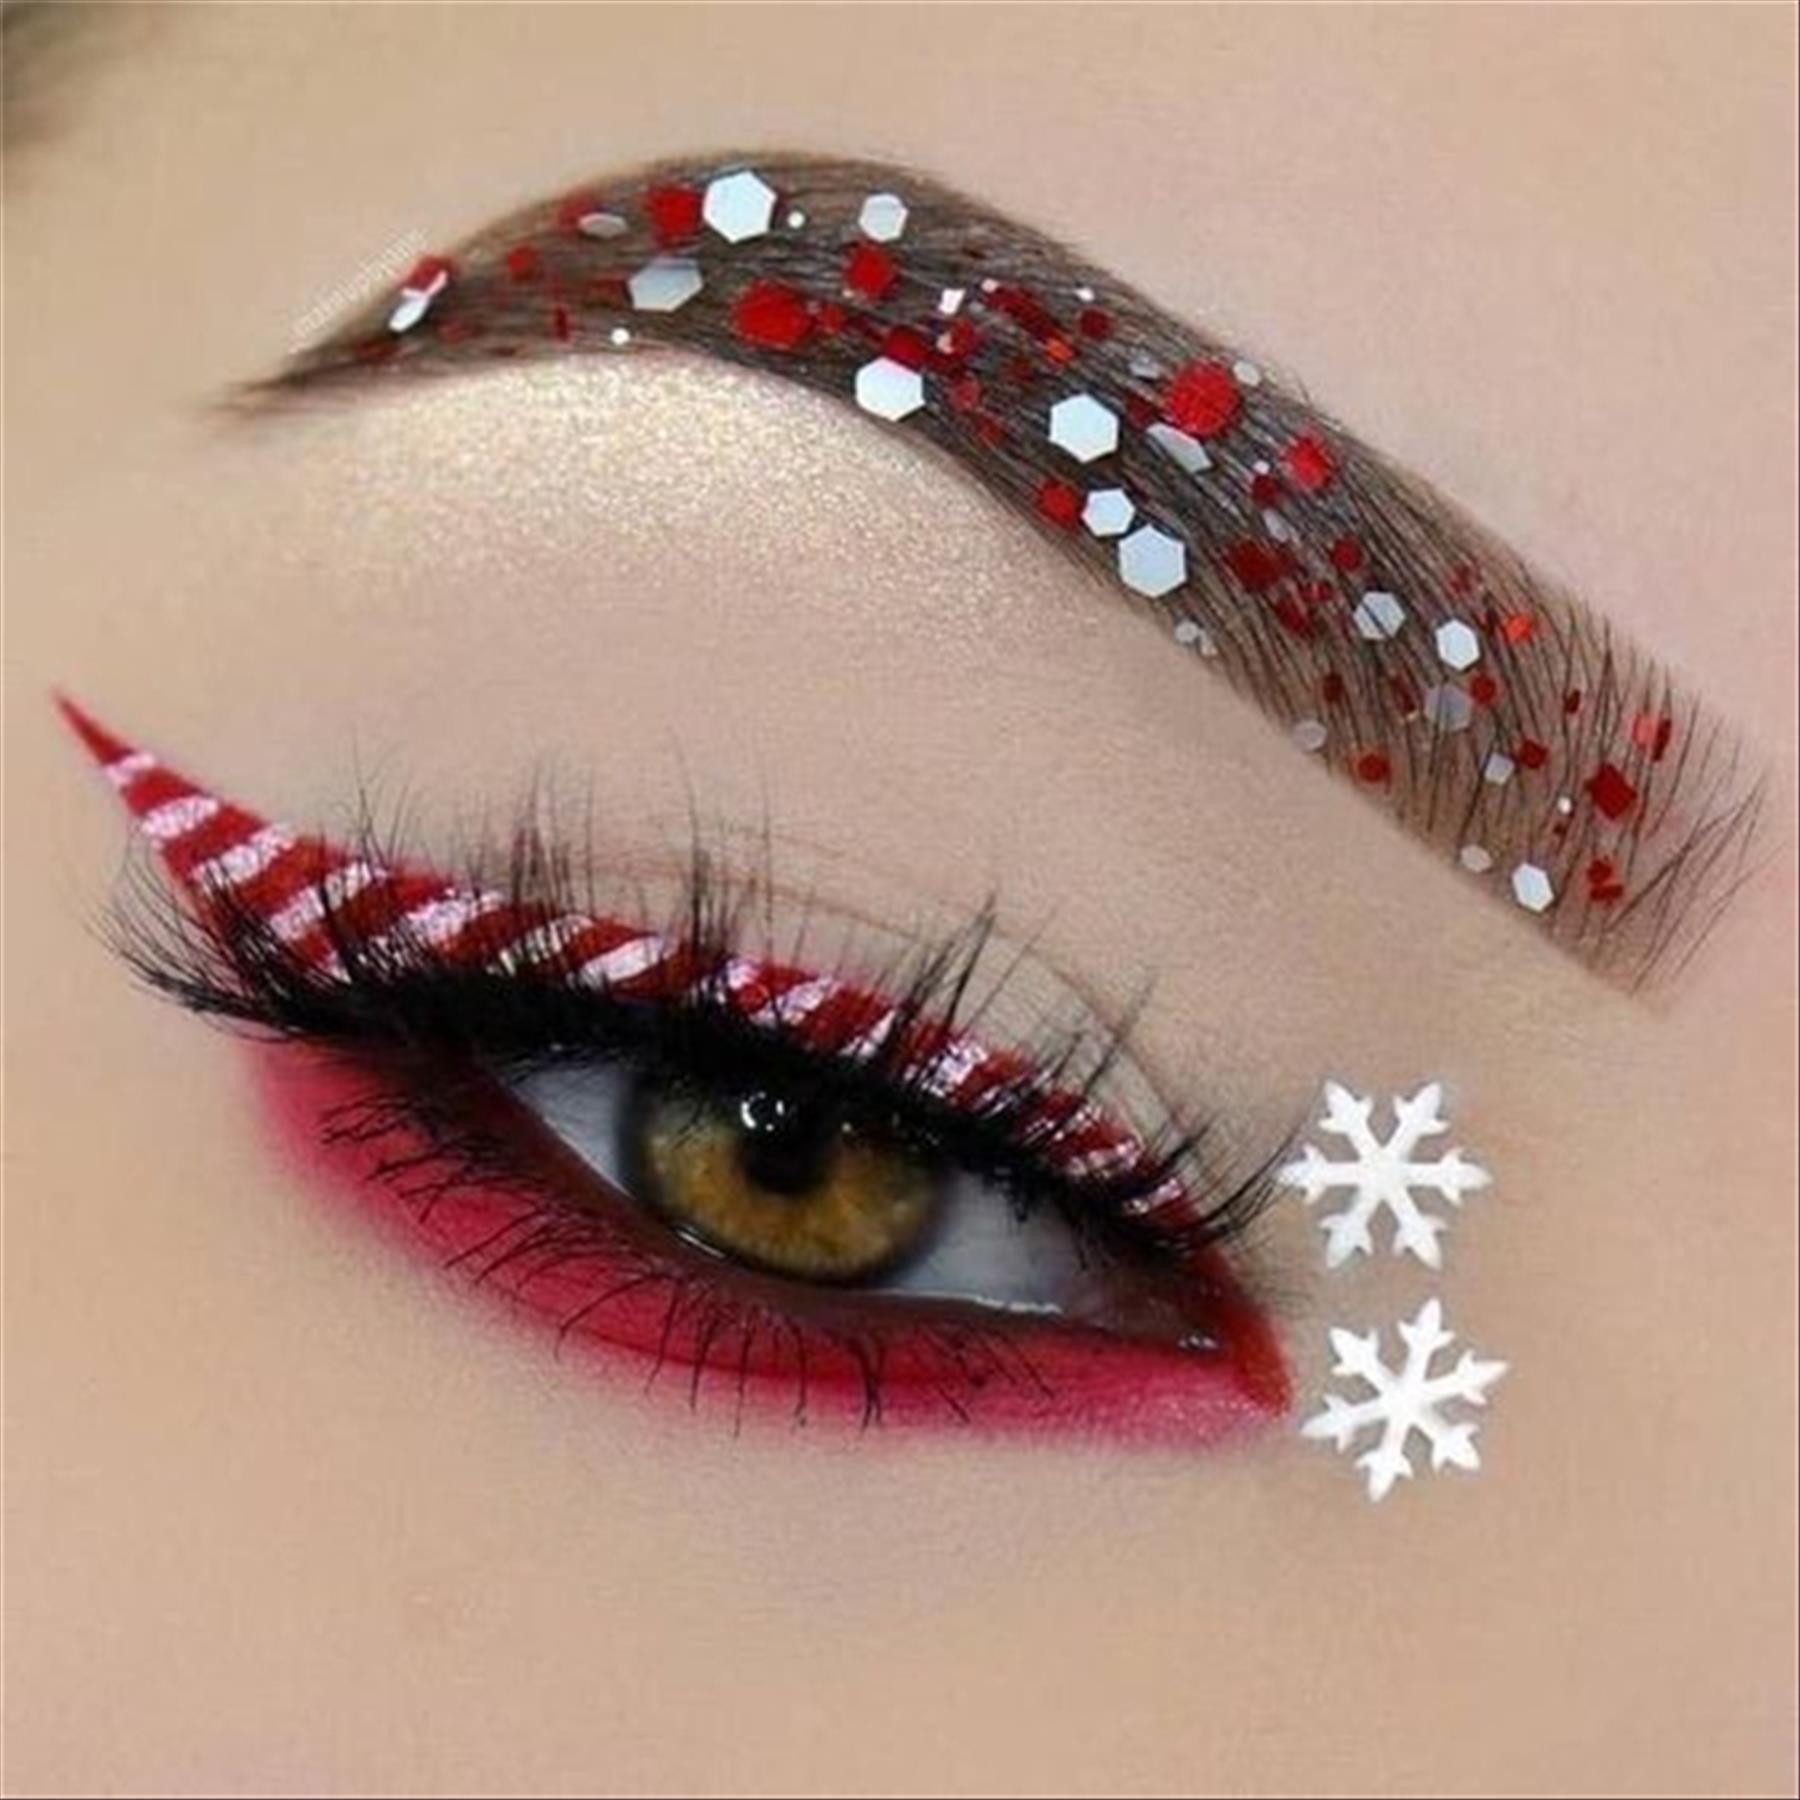 Festive Christmas Makeup Looks Ideas to Enjoy The Holiday